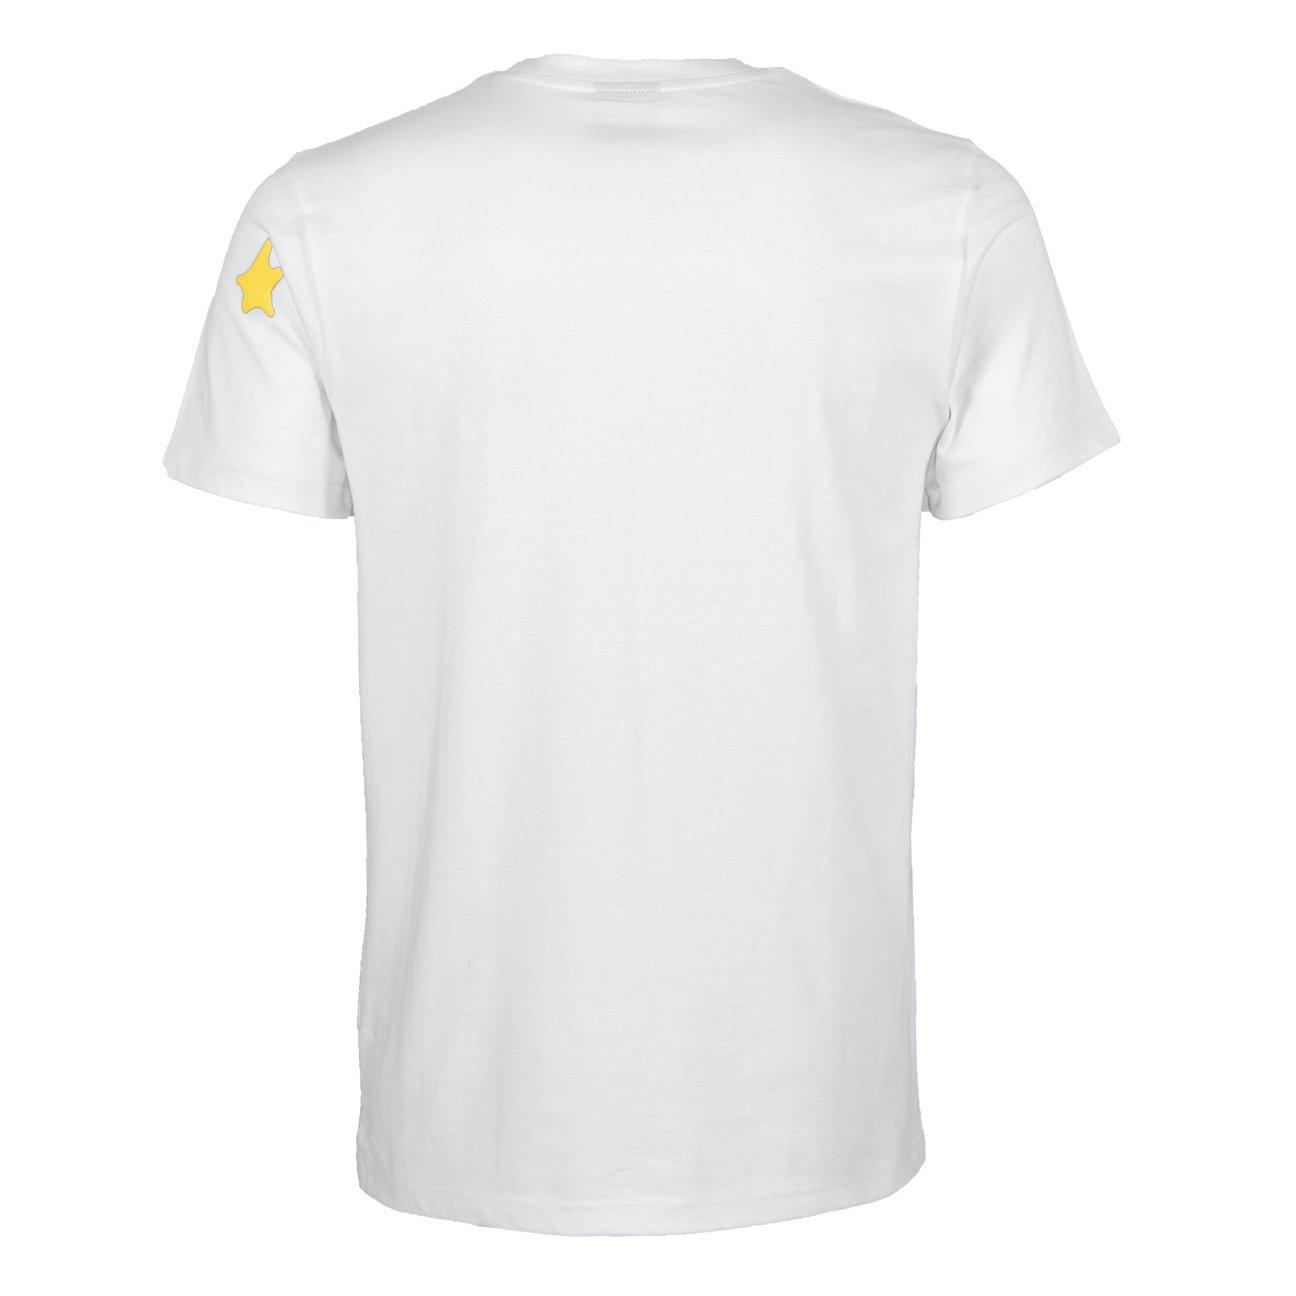 Astro Boy X-Ray Heavyweight Streetwear T-Shirt 5X-Large